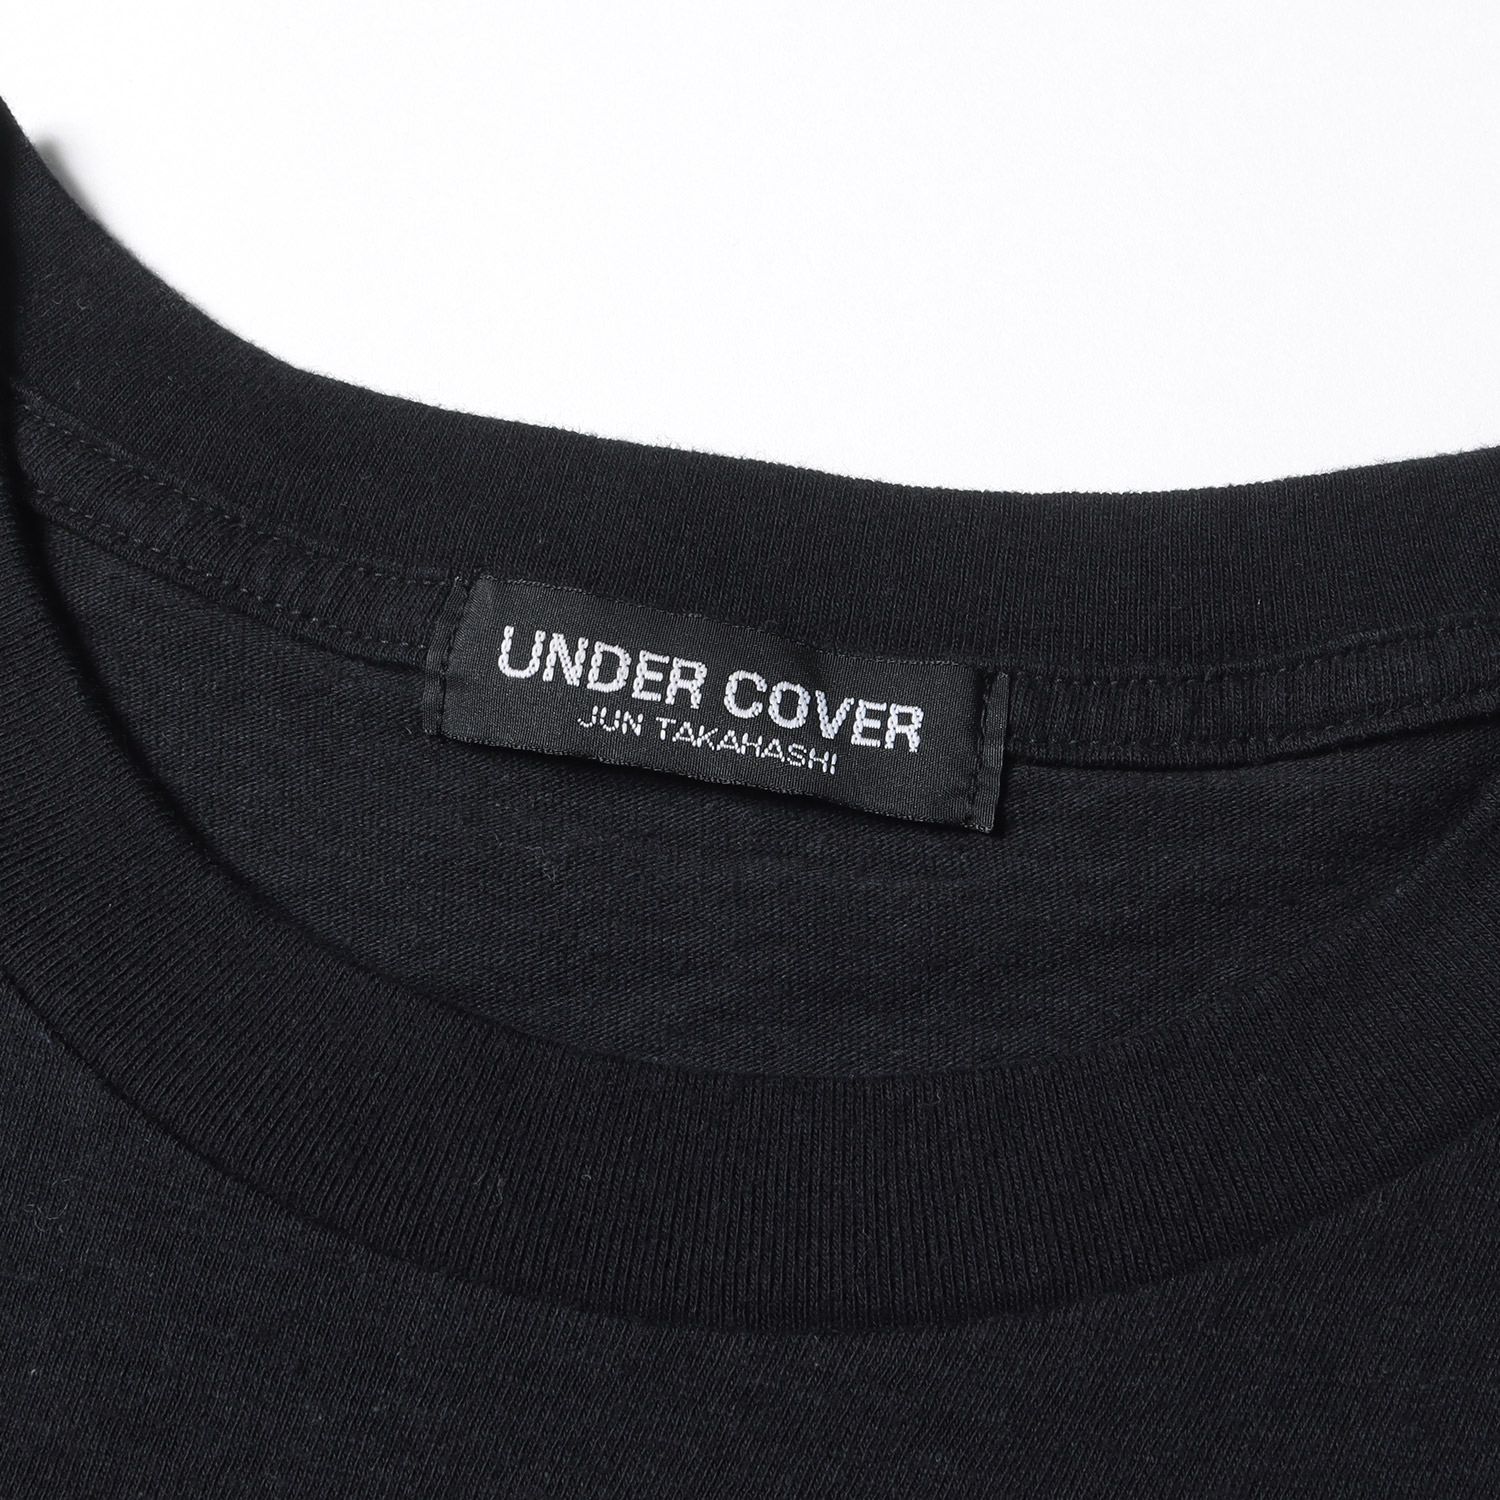 UNDERCOVER アンダーカバー Tシャツ サイズ:4 20AW THE BLACK SENSE 